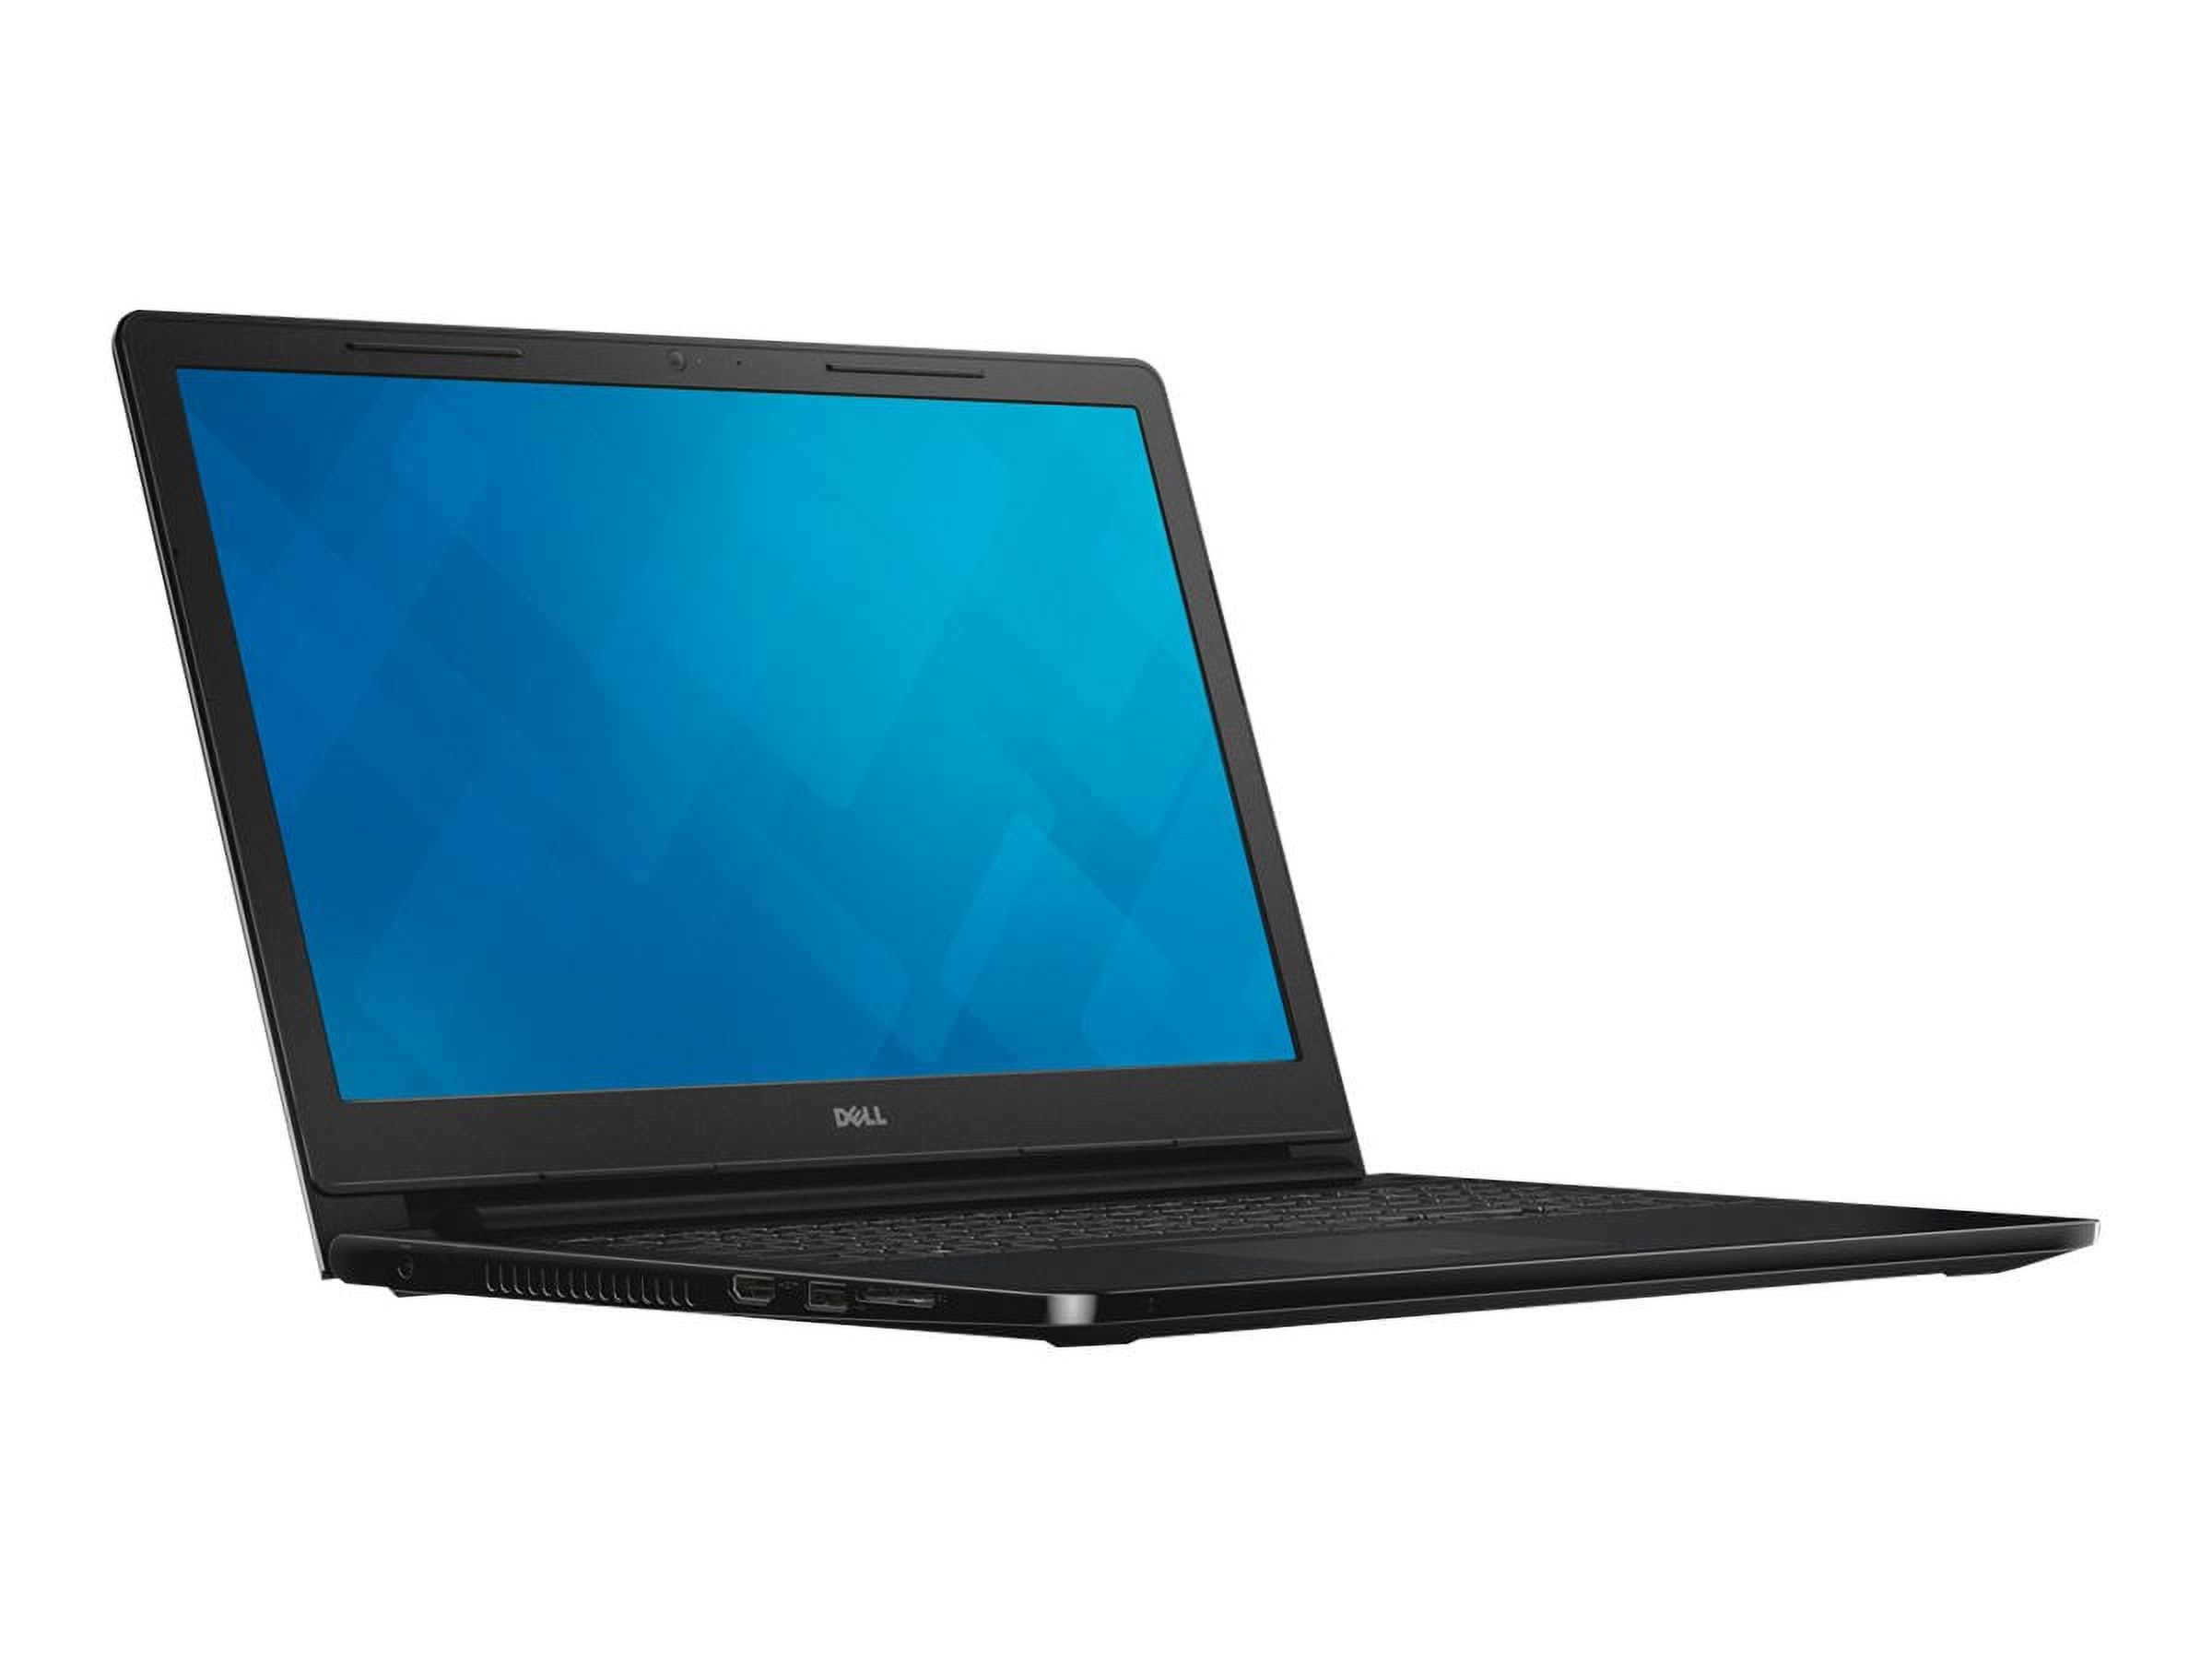 Dell Inspiron 15.6" Touchscreen Laptop, Intel Pentium N3700, 500GB HD, Windows 10 Home, 15-3552 - image 1 of 14